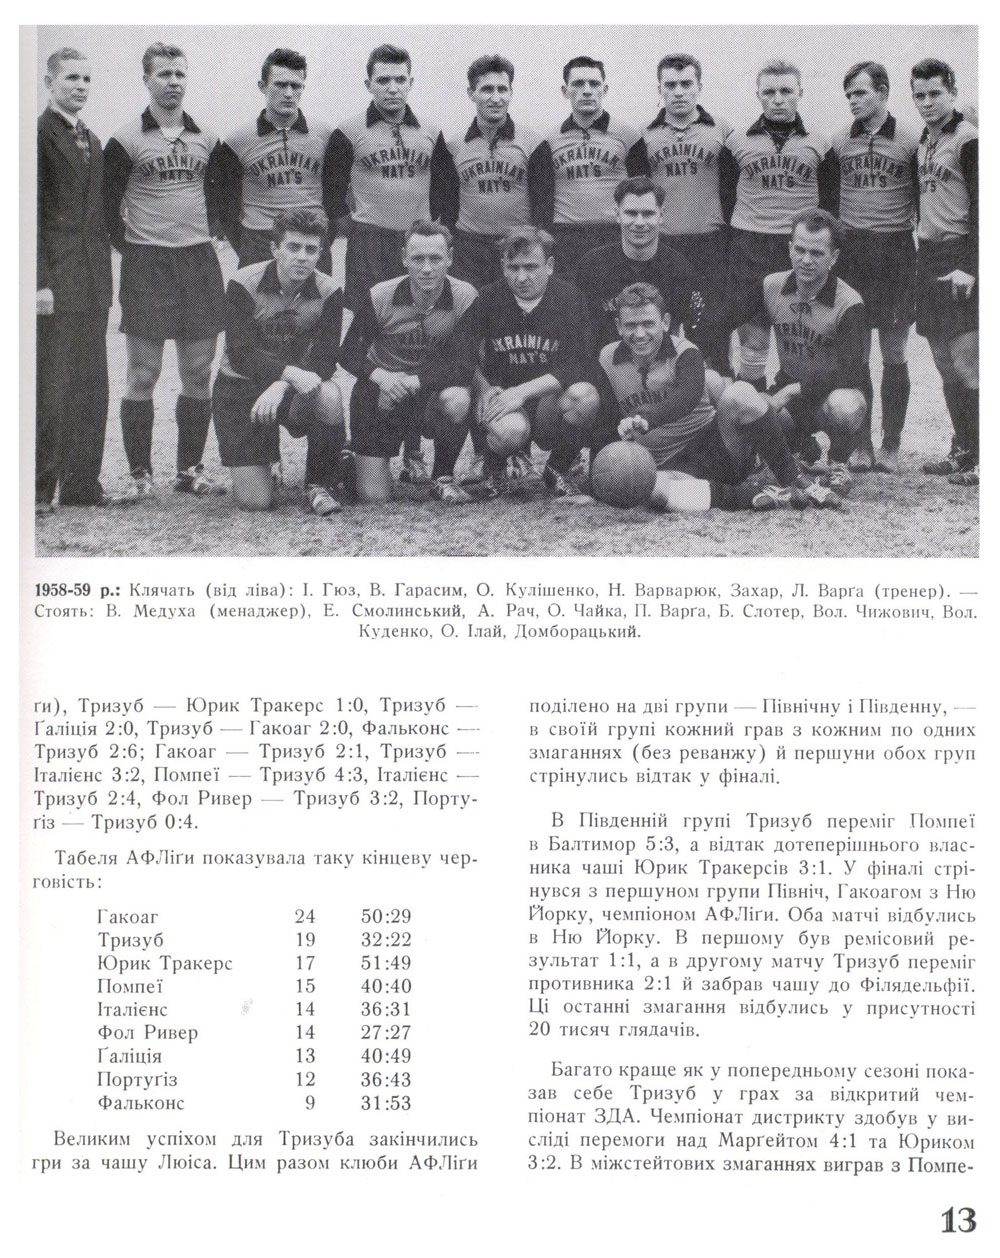 1958-1959 Philadelphia Ukrainian Nationals tea – their inaugural year